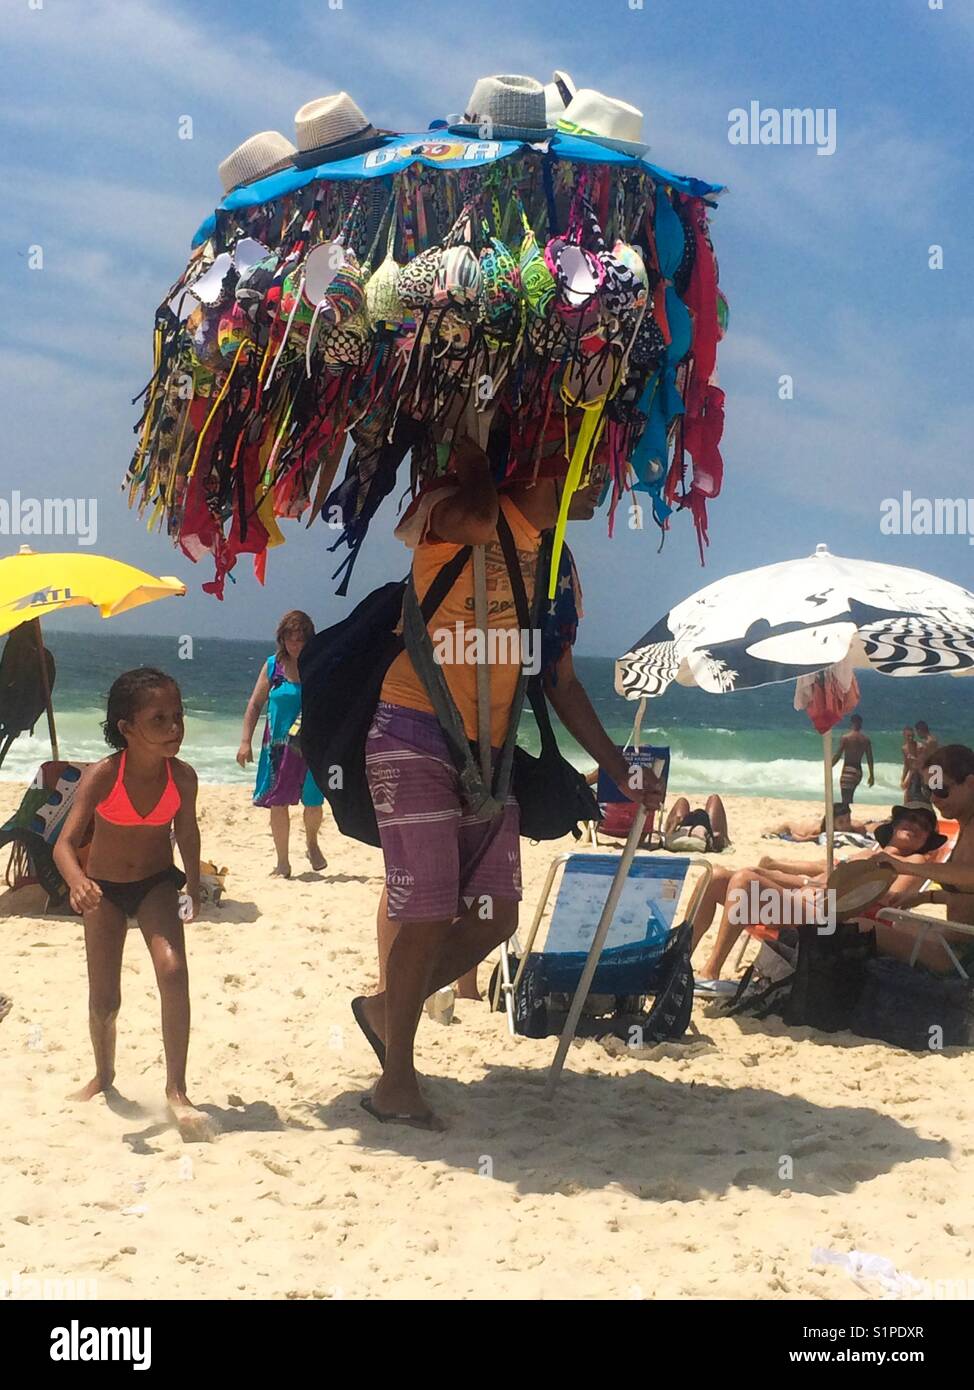 Beach bikini vendor in Rio de Janeiro, Brazil Stock Photo - Alamy